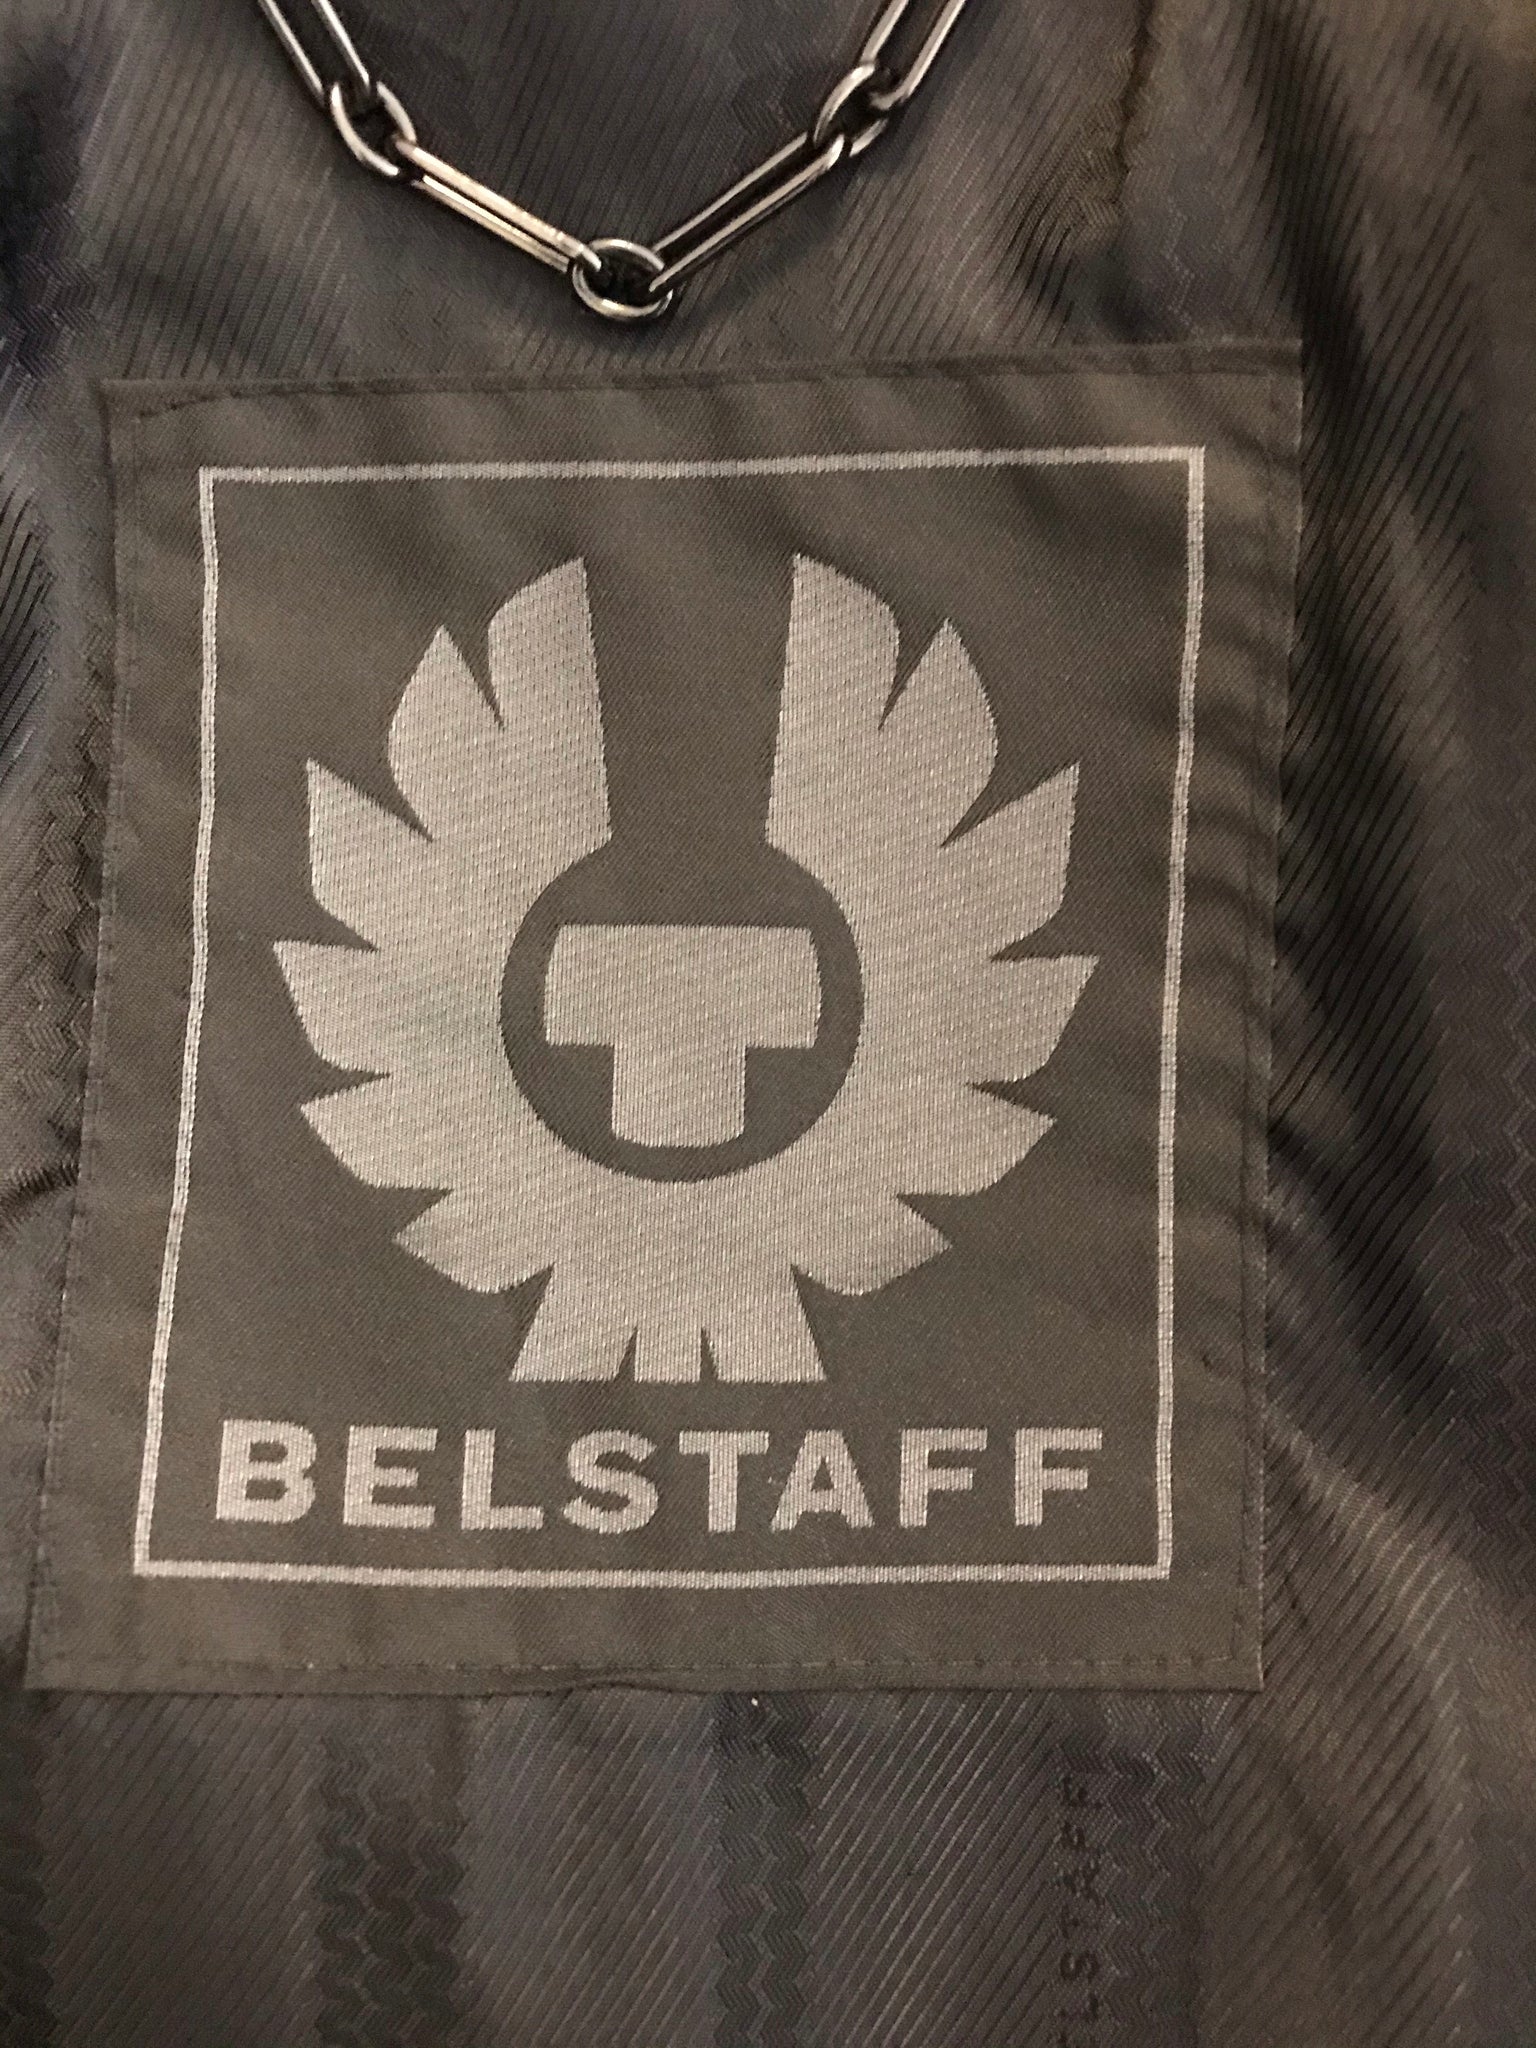 Isabella's Wardrobe Belstaff Gents Navy Leather Biker Jacket.